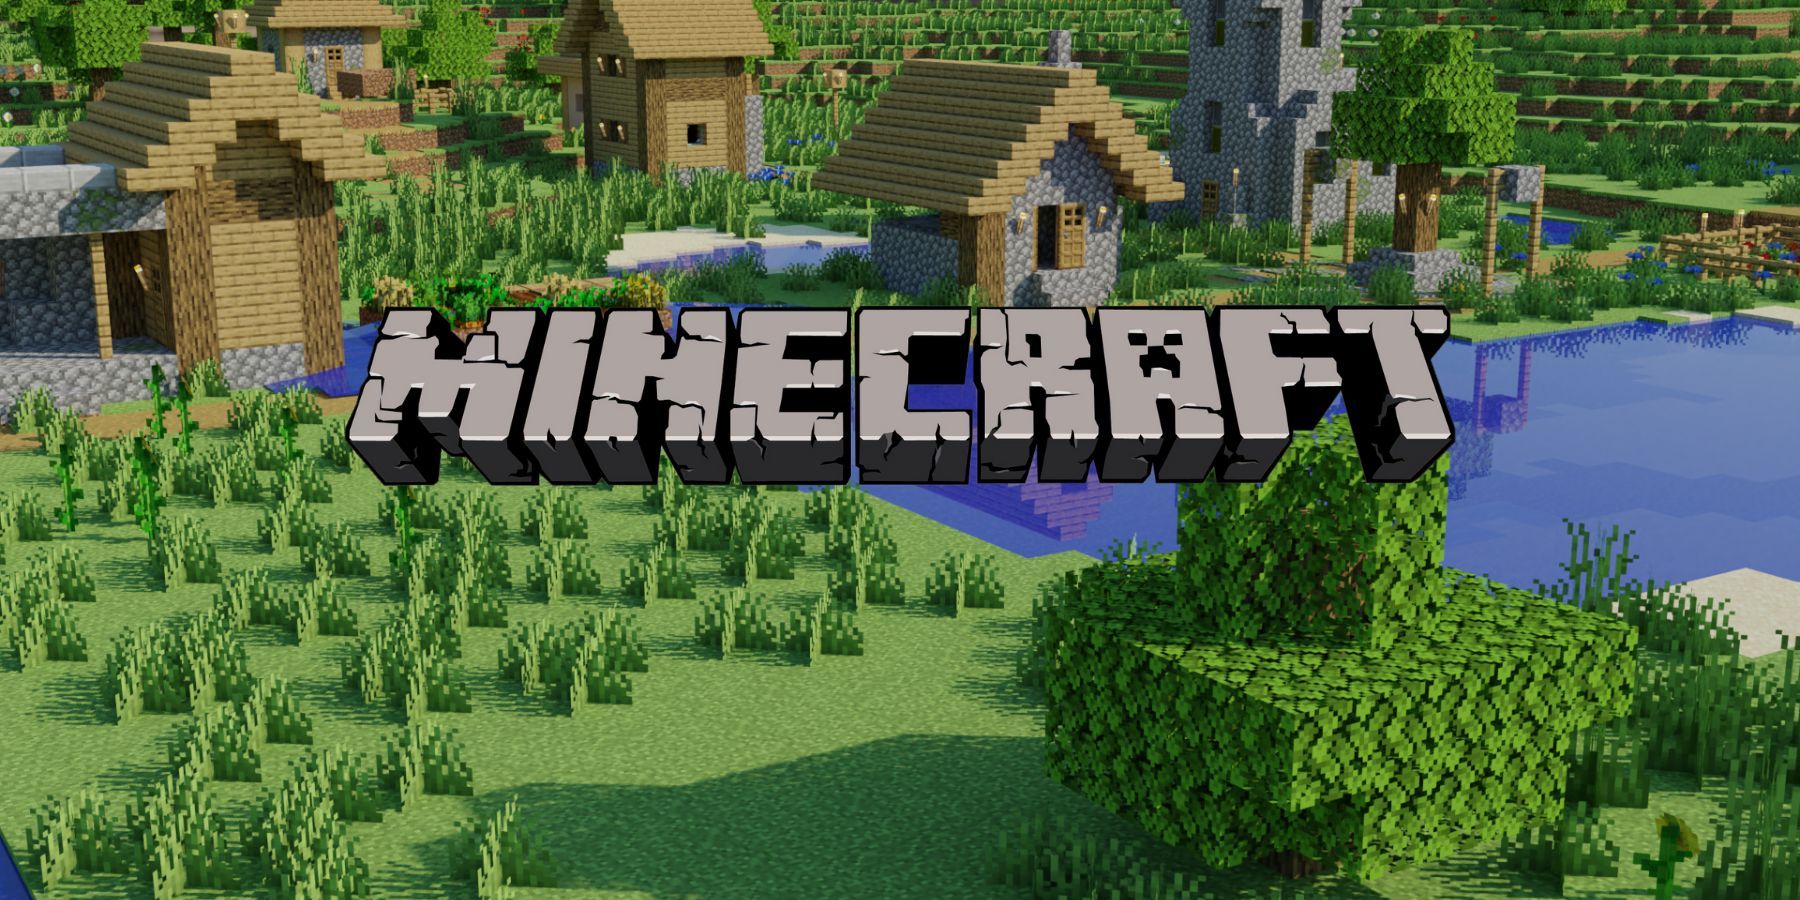 A Minecraft Village and Logo